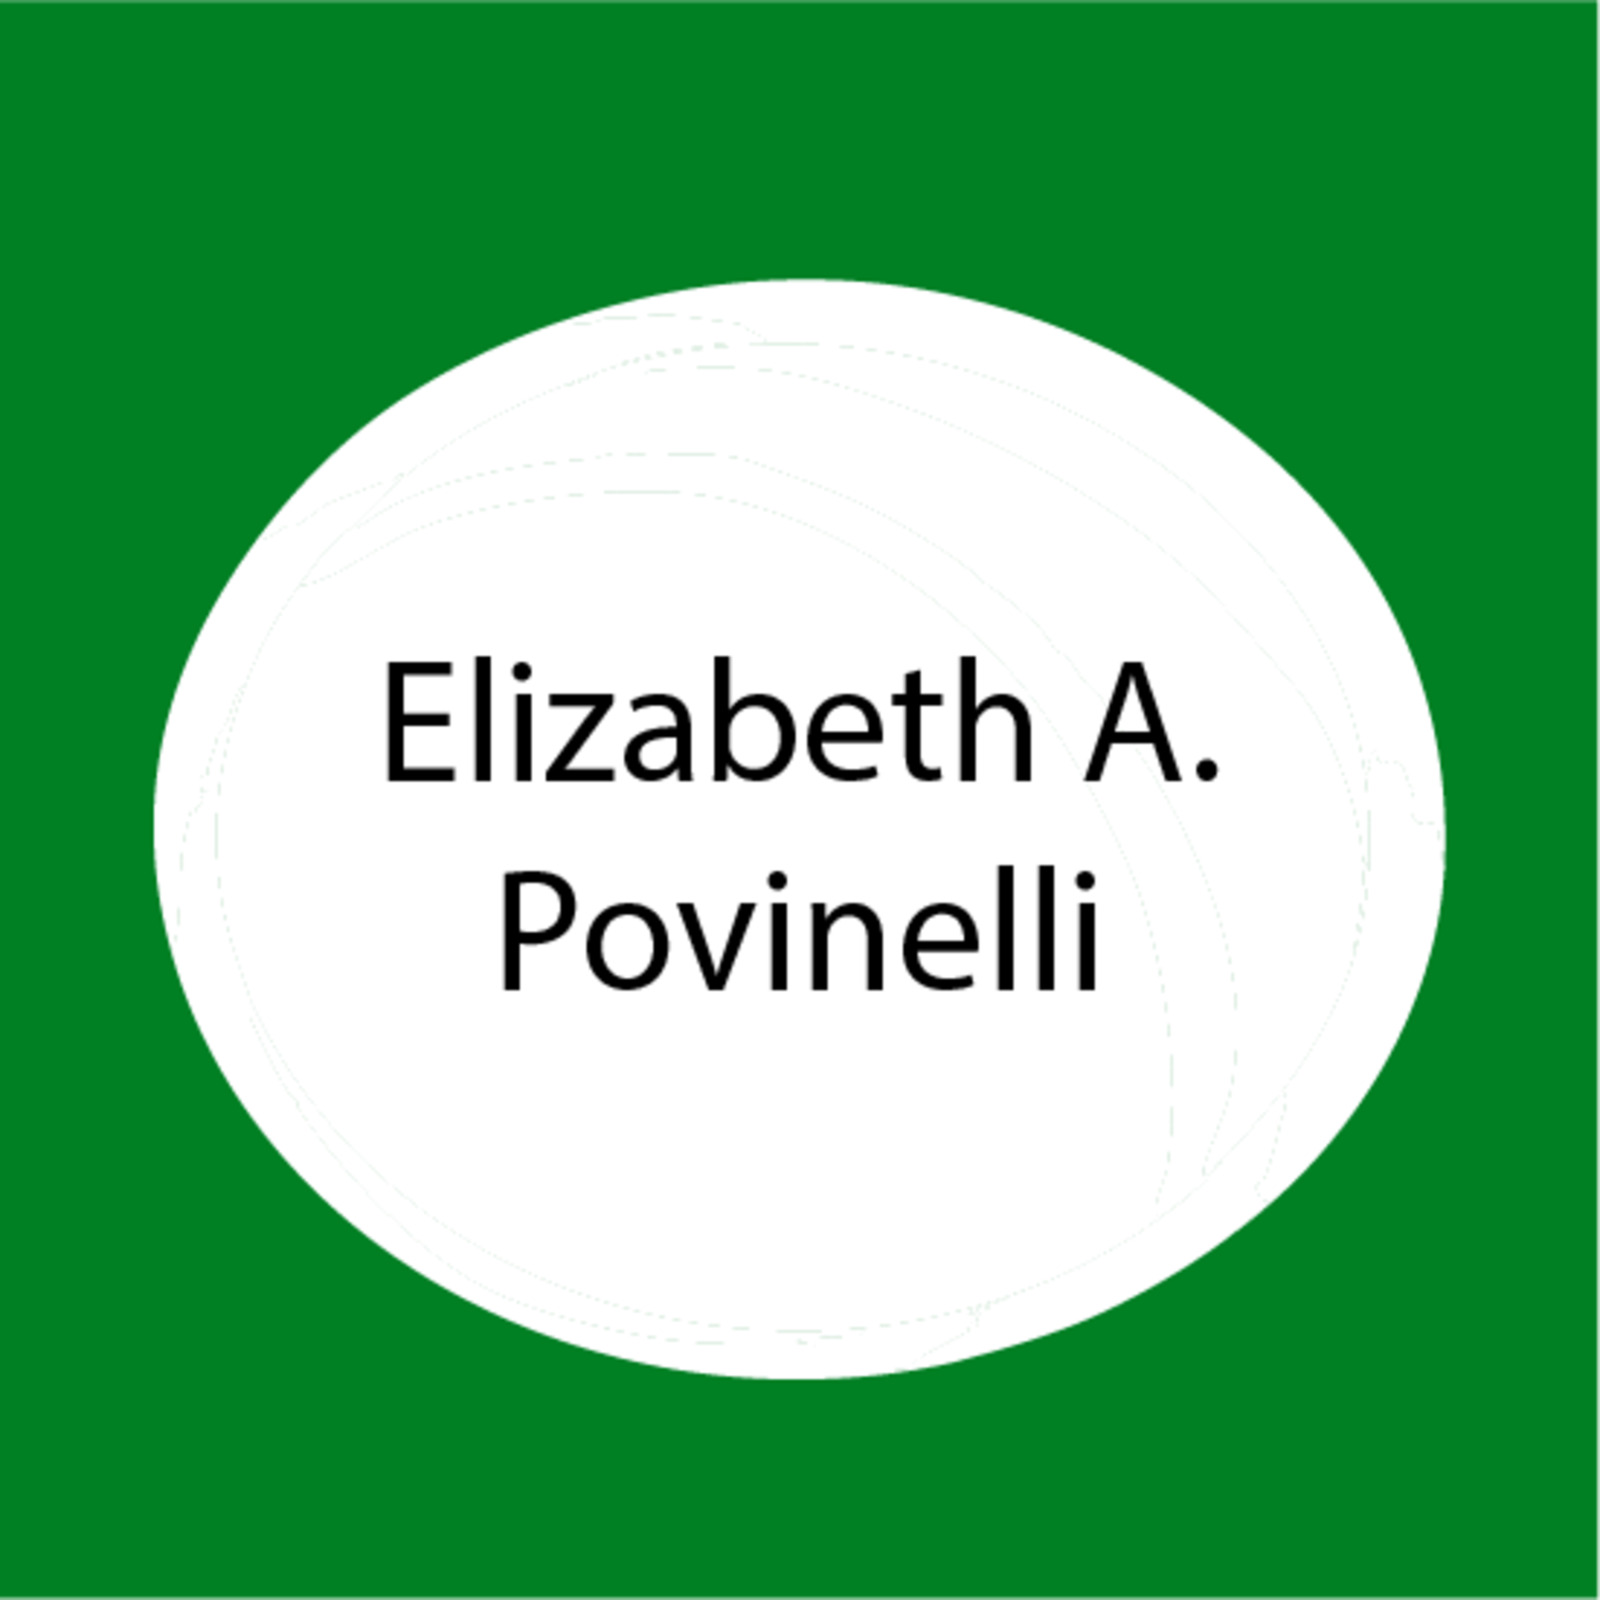  Elizabeth A. Povinelli